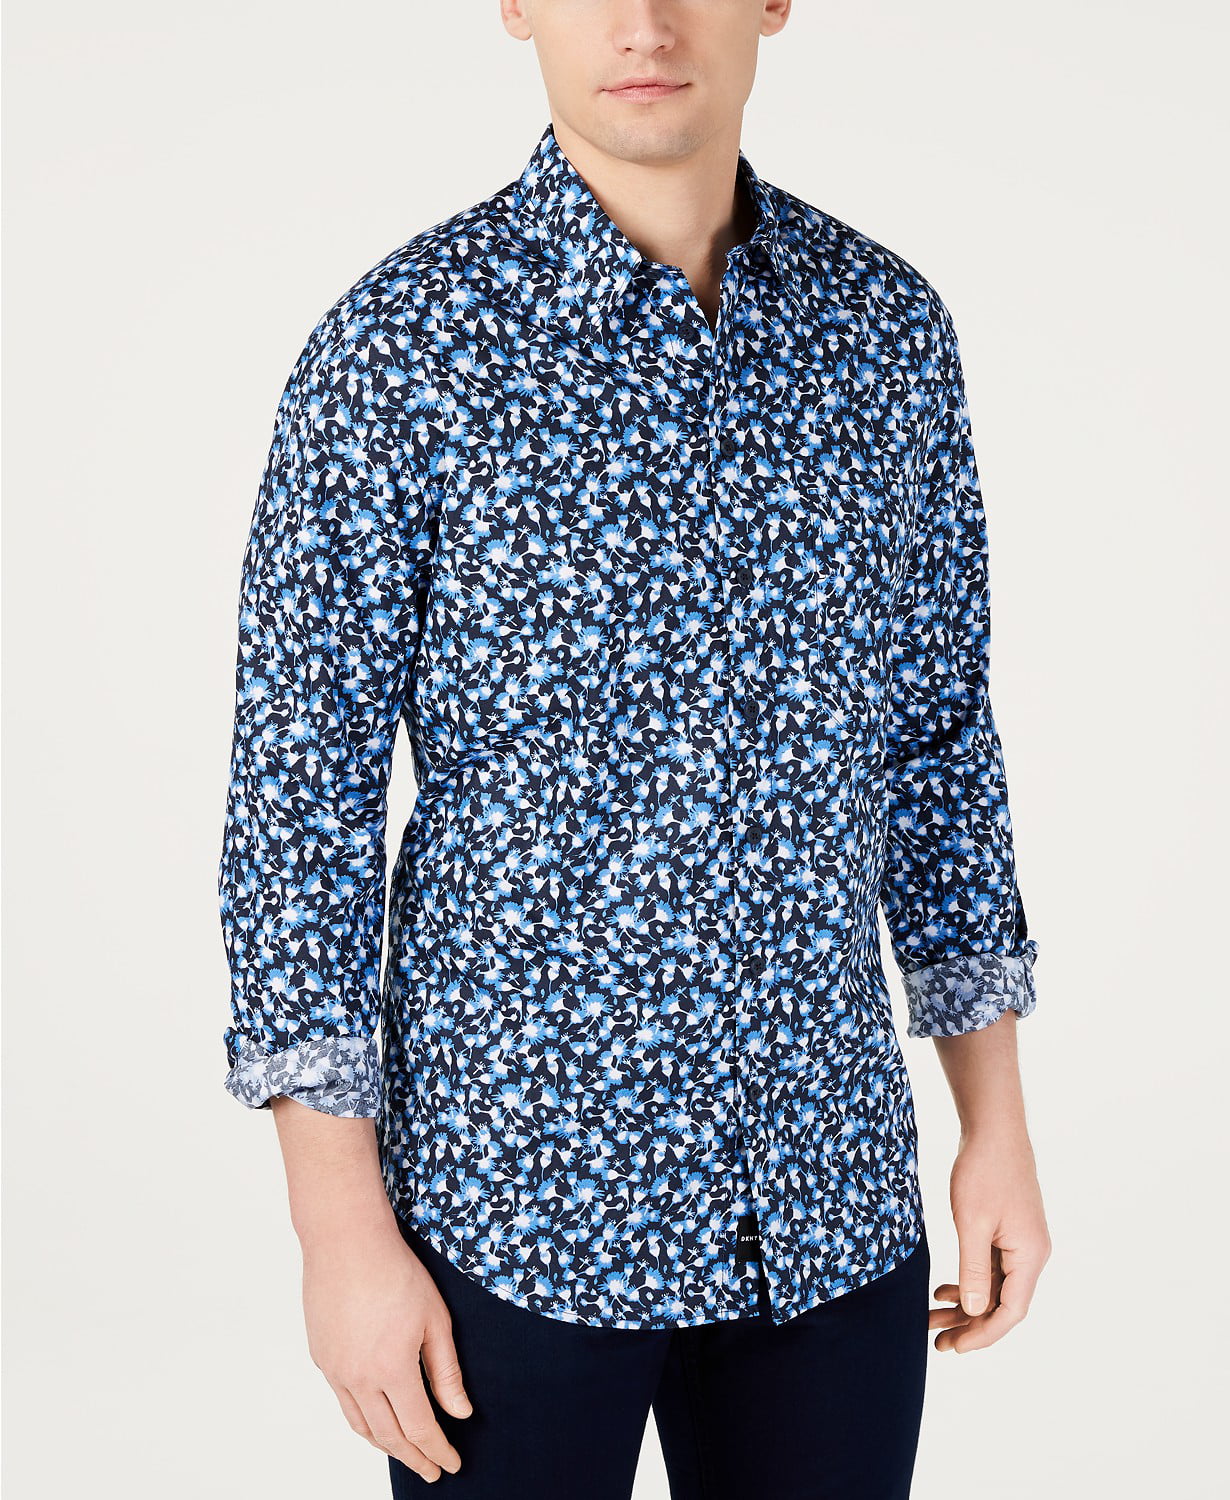 Dkny Men's Floral Graphic Button Down Dress Shirt, Navy Blazer, Large